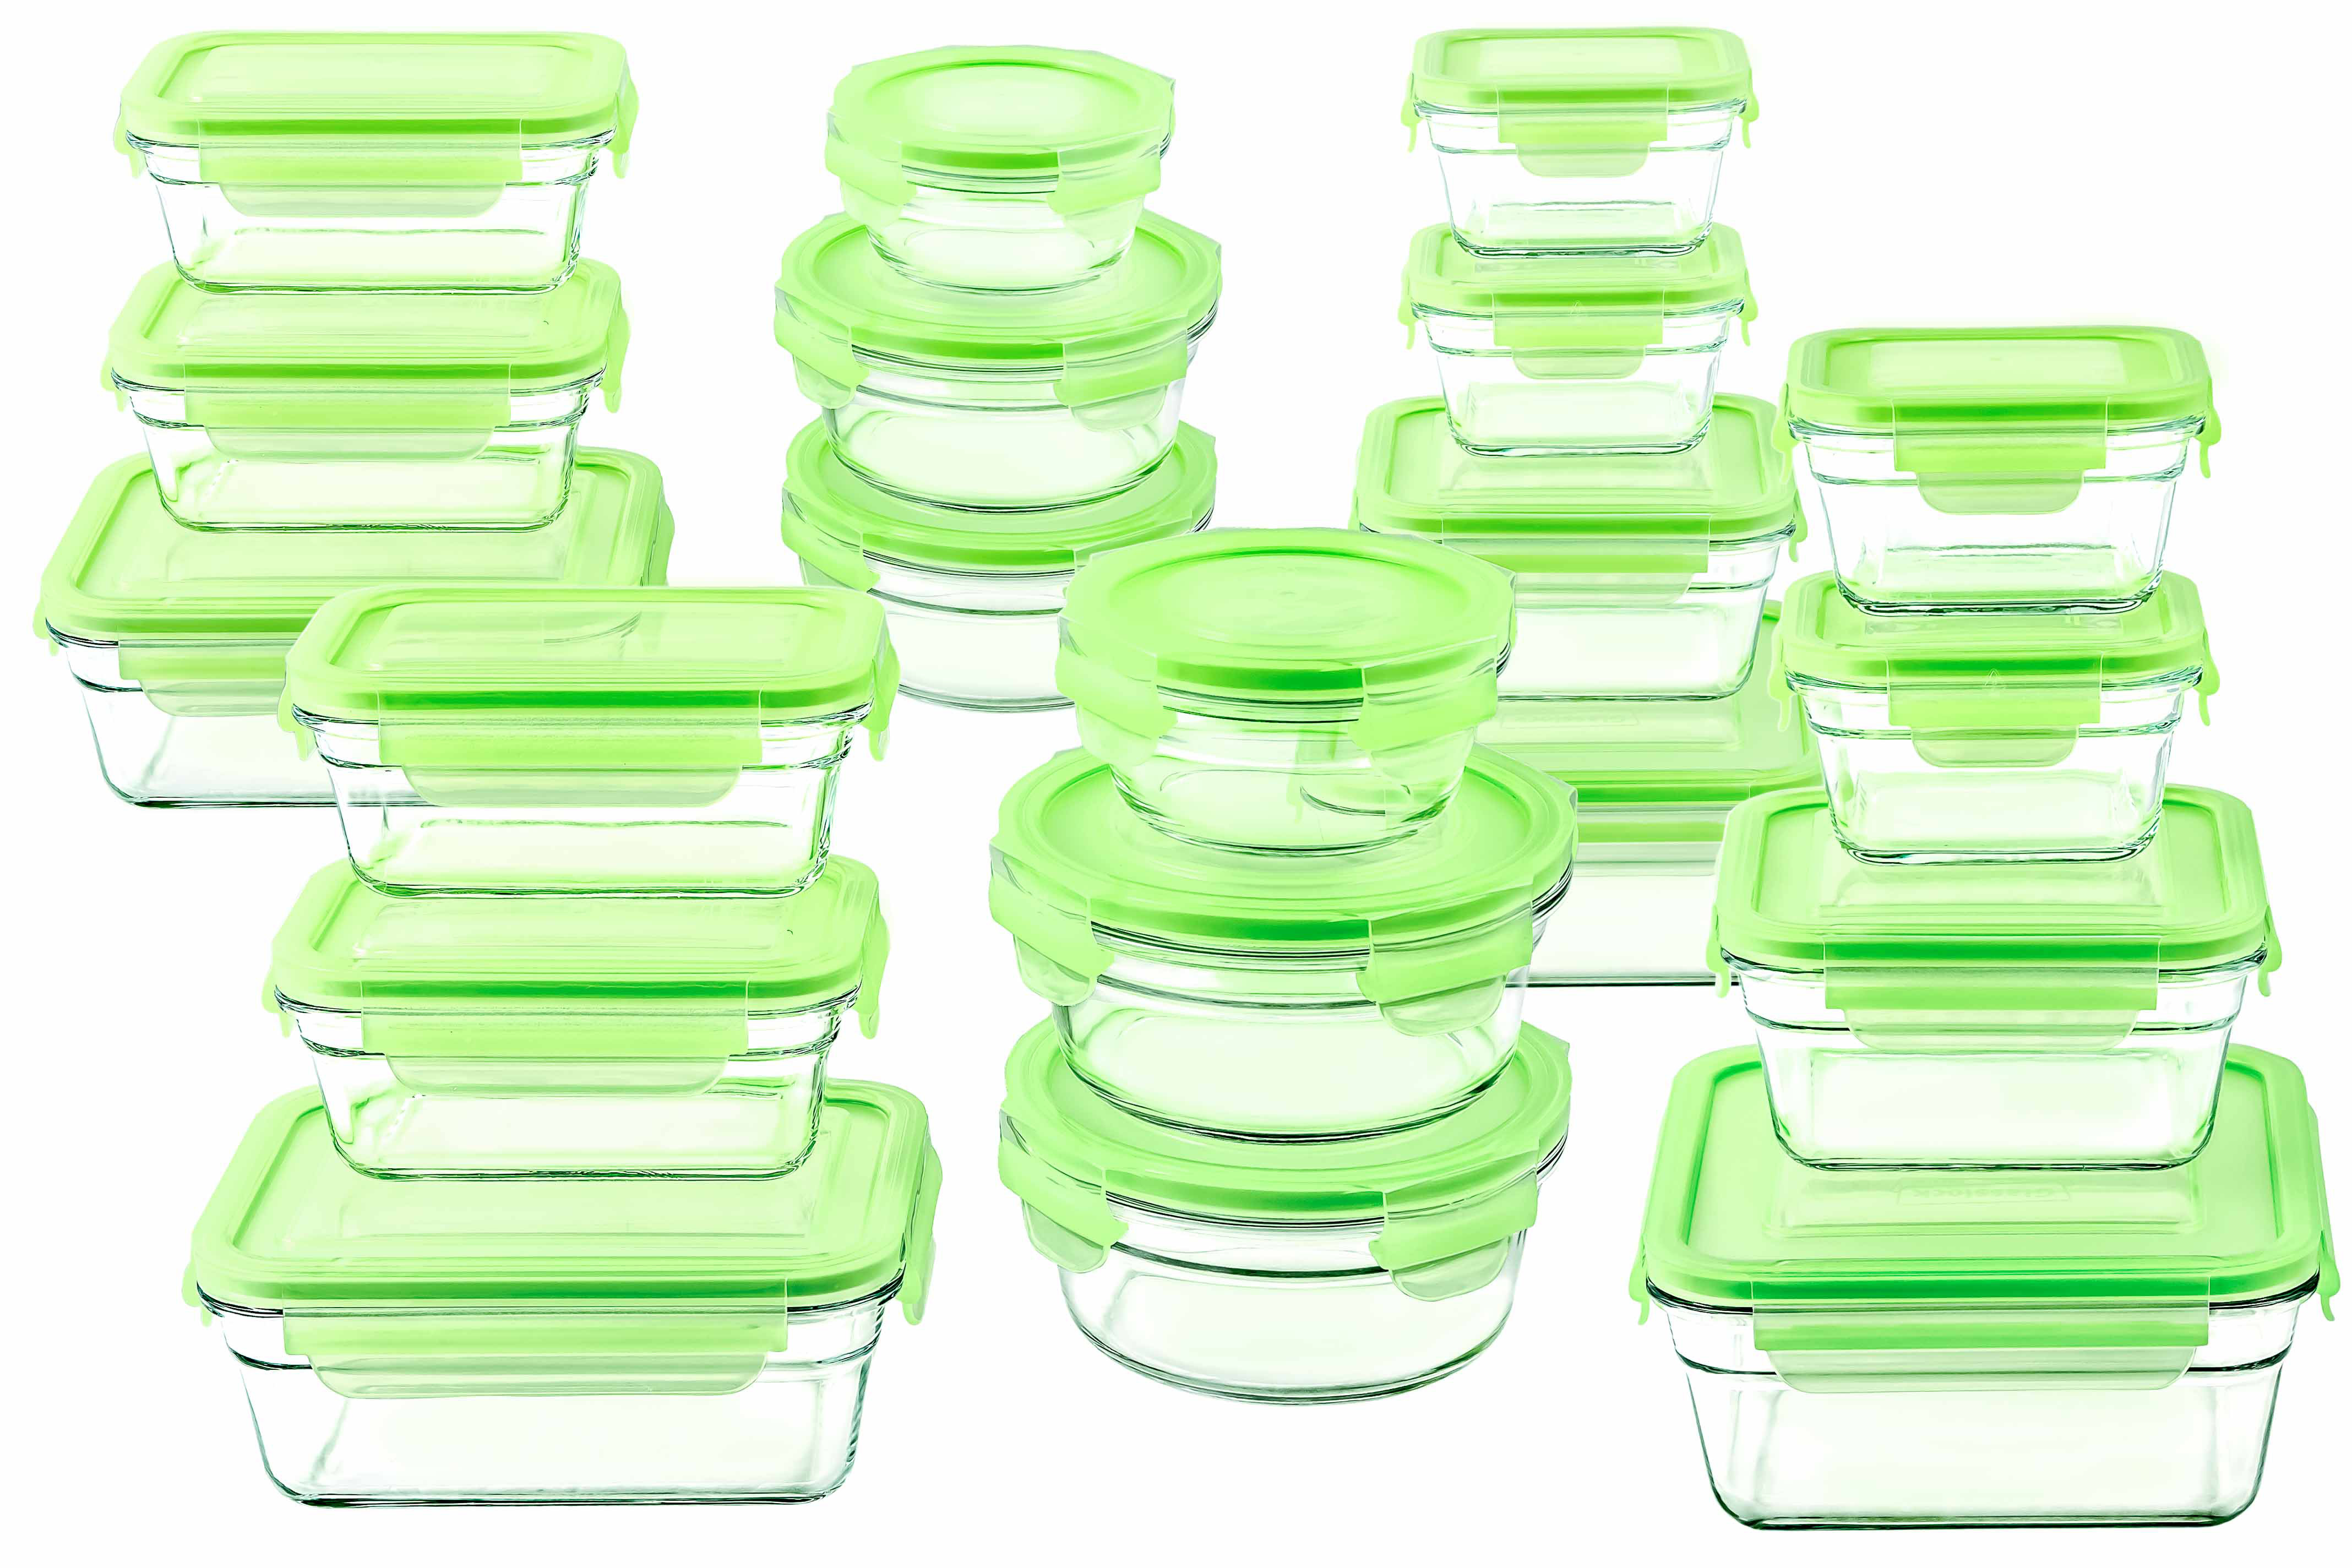 Glasslock Reusable Food Storage Container Set, Oven & Freezer Safe